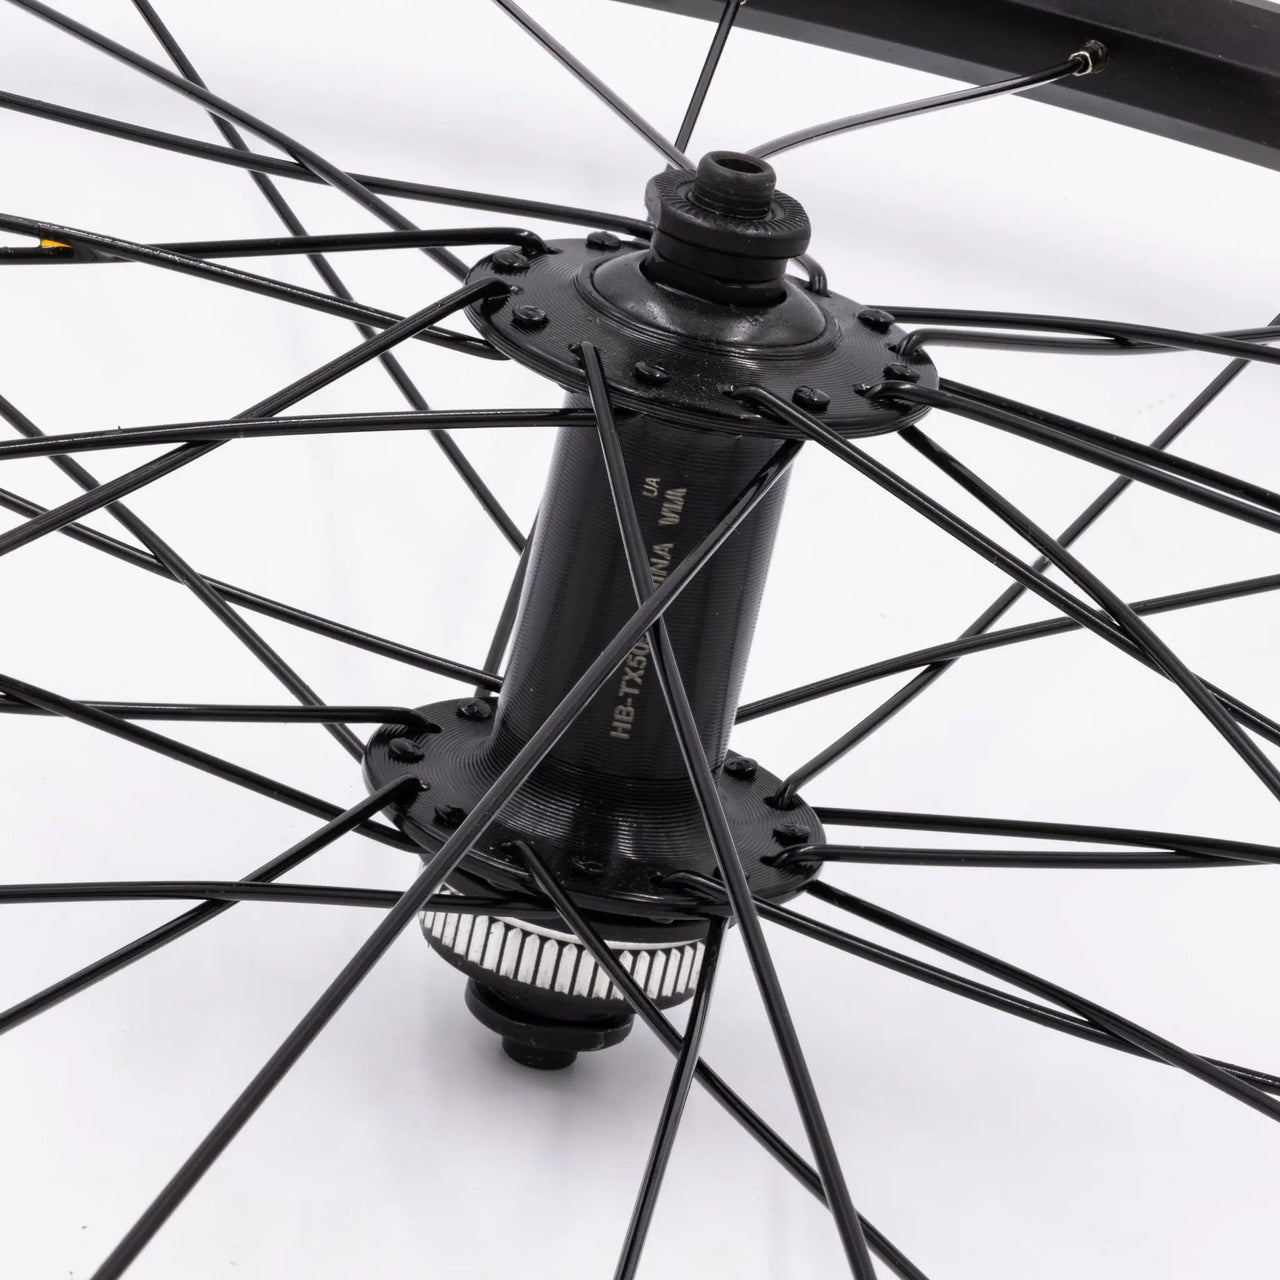 26/27.5/29 Shimano TX505 Hub Wheels Wheelset MTB Mountain Bike Front & Rear Pair - Air BikeWheels